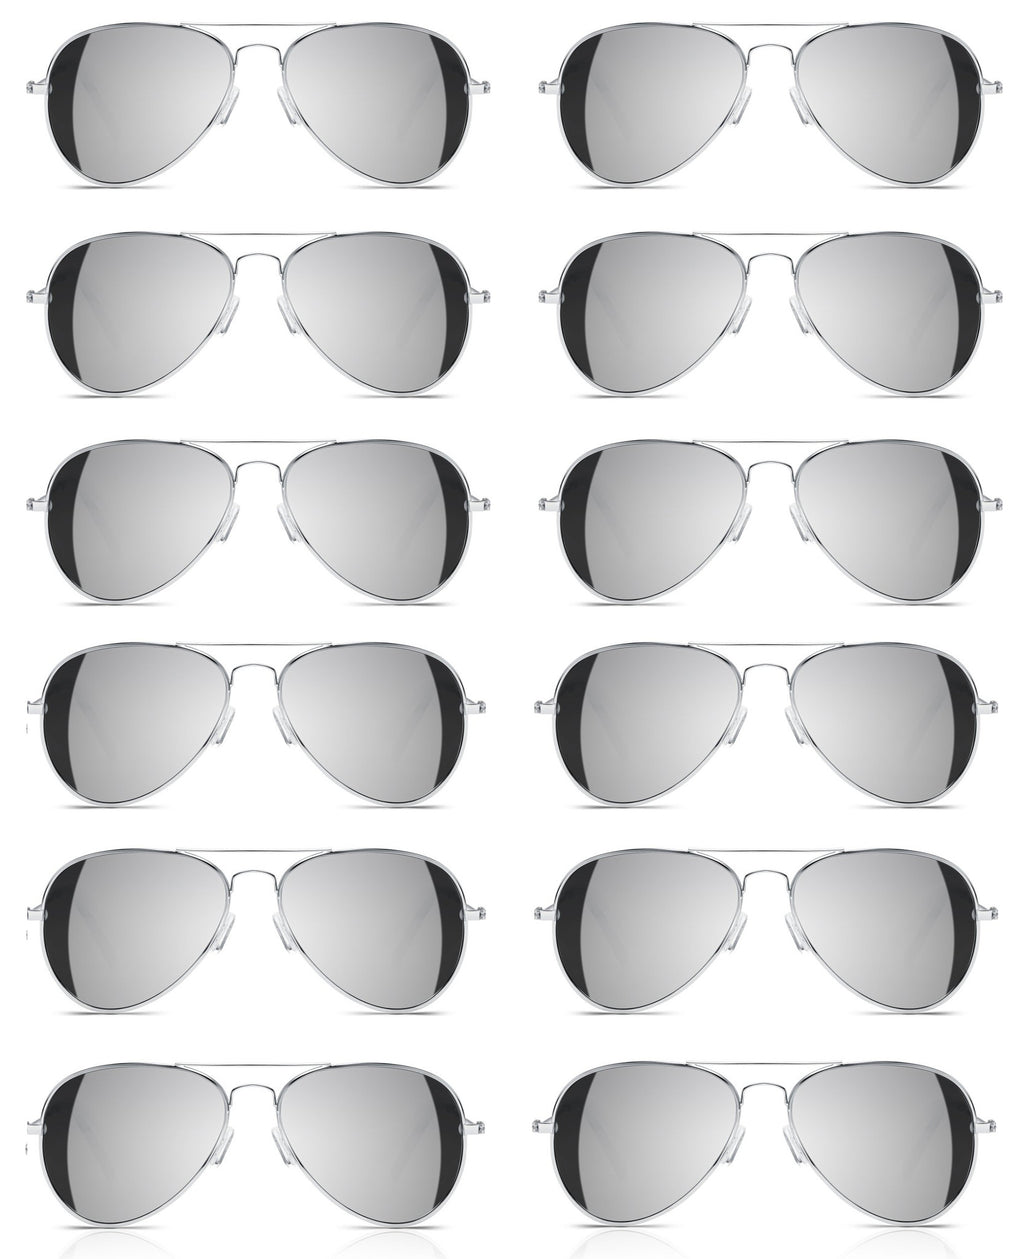 *LOT OF 12* Full Mirror Aviator Sunglasses w/ Metal Silver Frame Classic Retro - Neon Nation